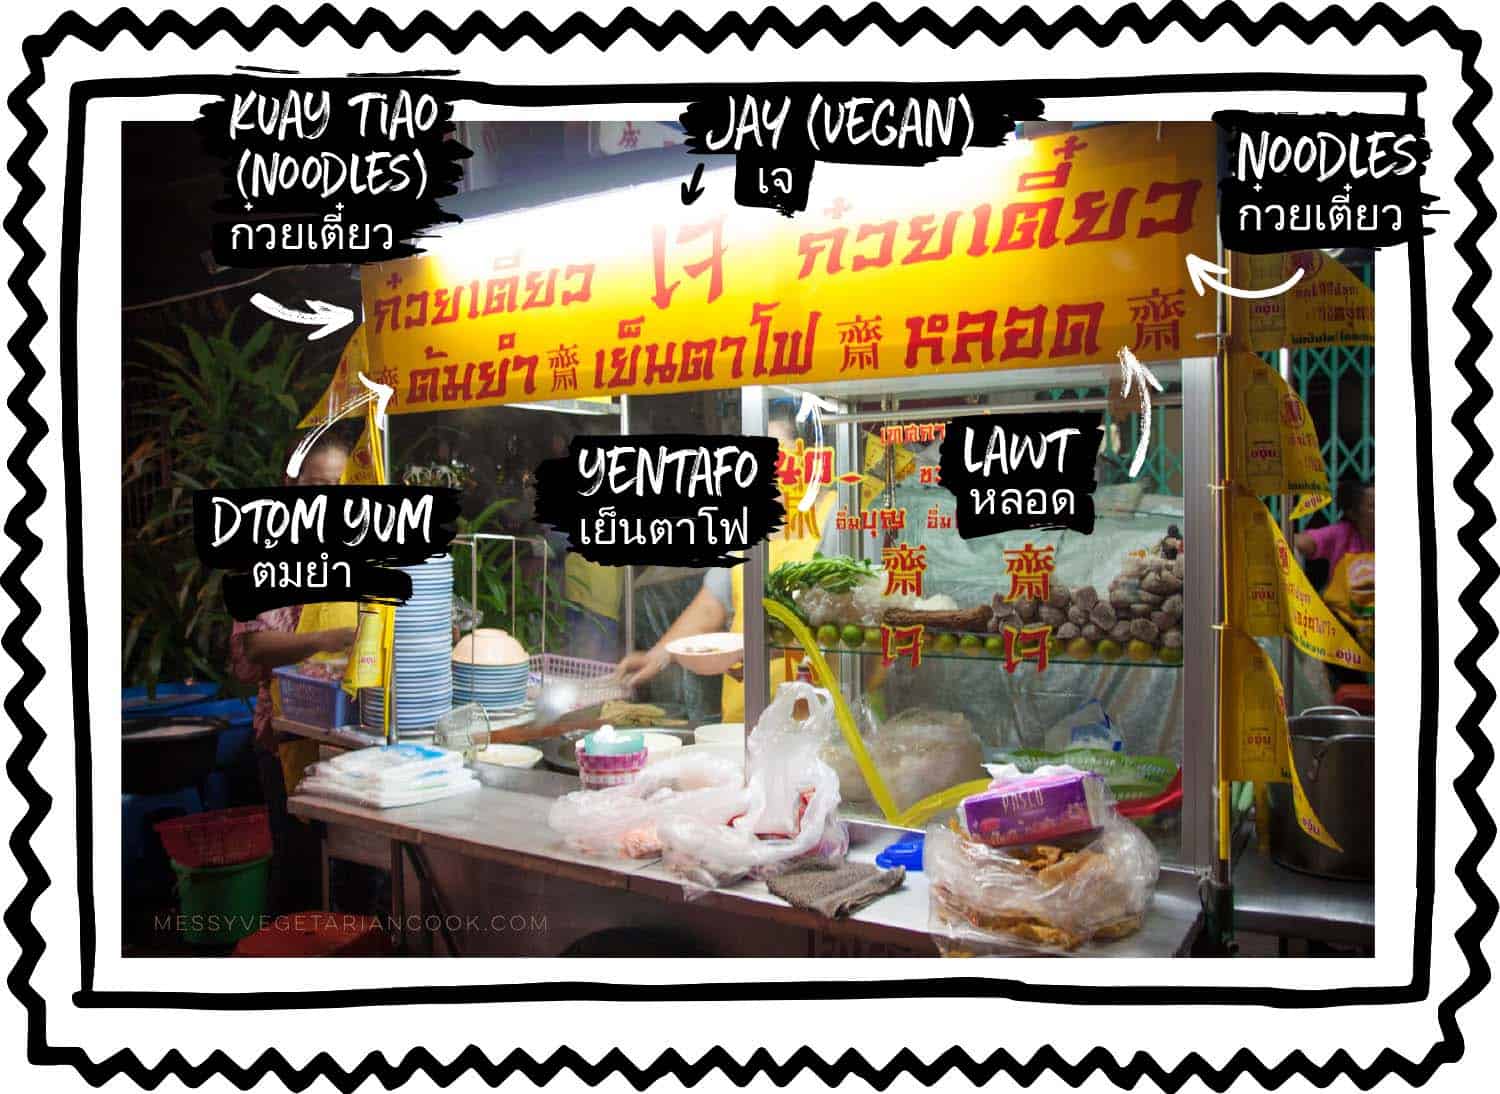 Thai Vegan Noodle Vendor